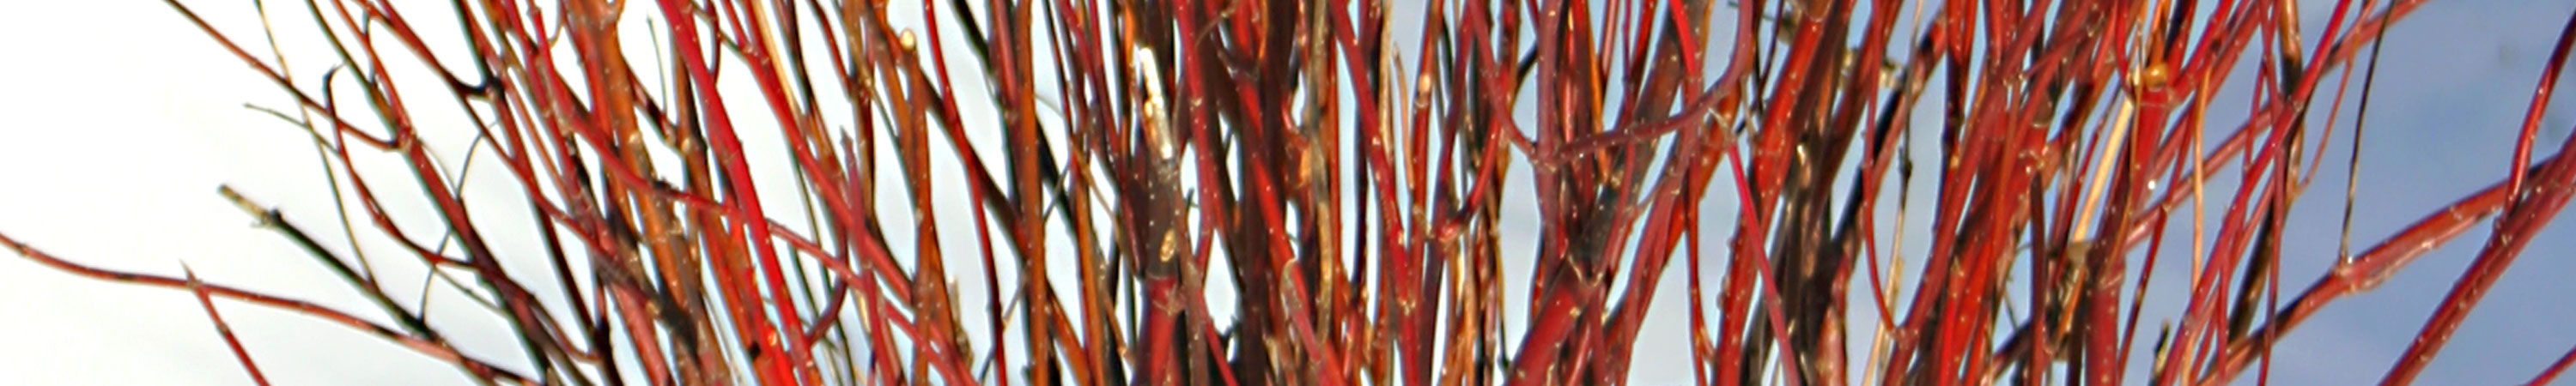 Cornus / Red Twig Dogwood